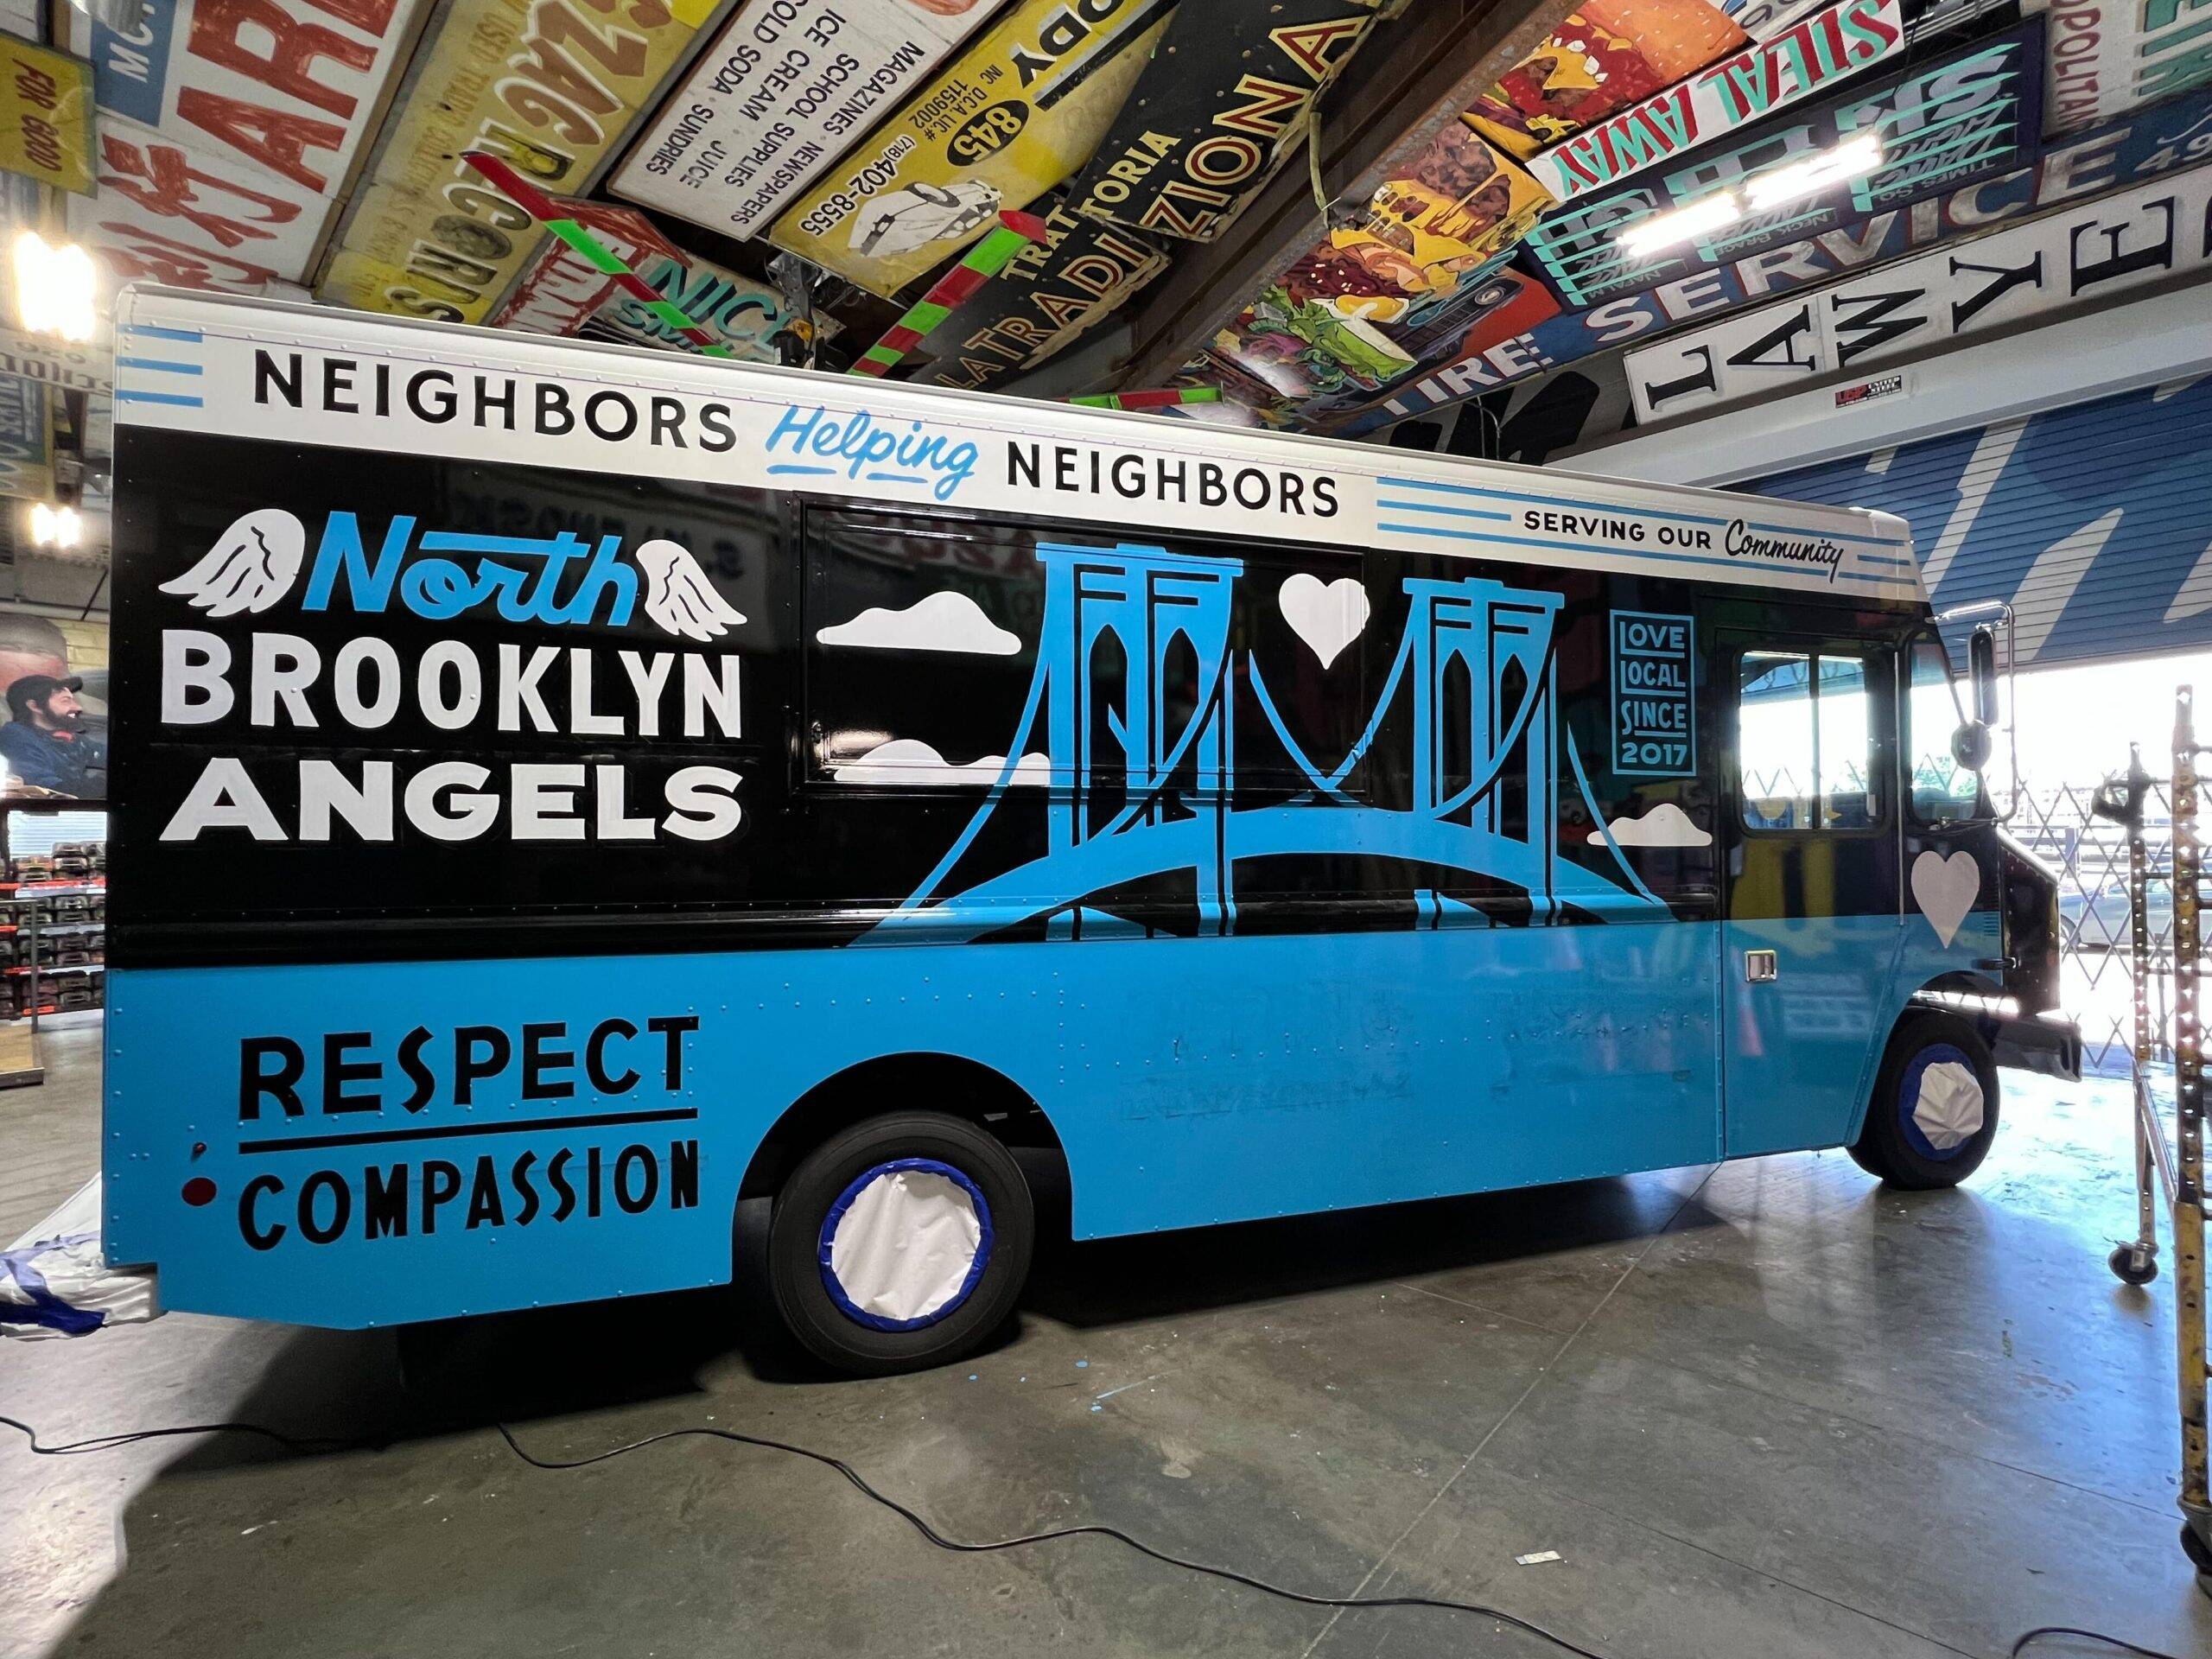 North Brooklyn Angels truck parked in garage.